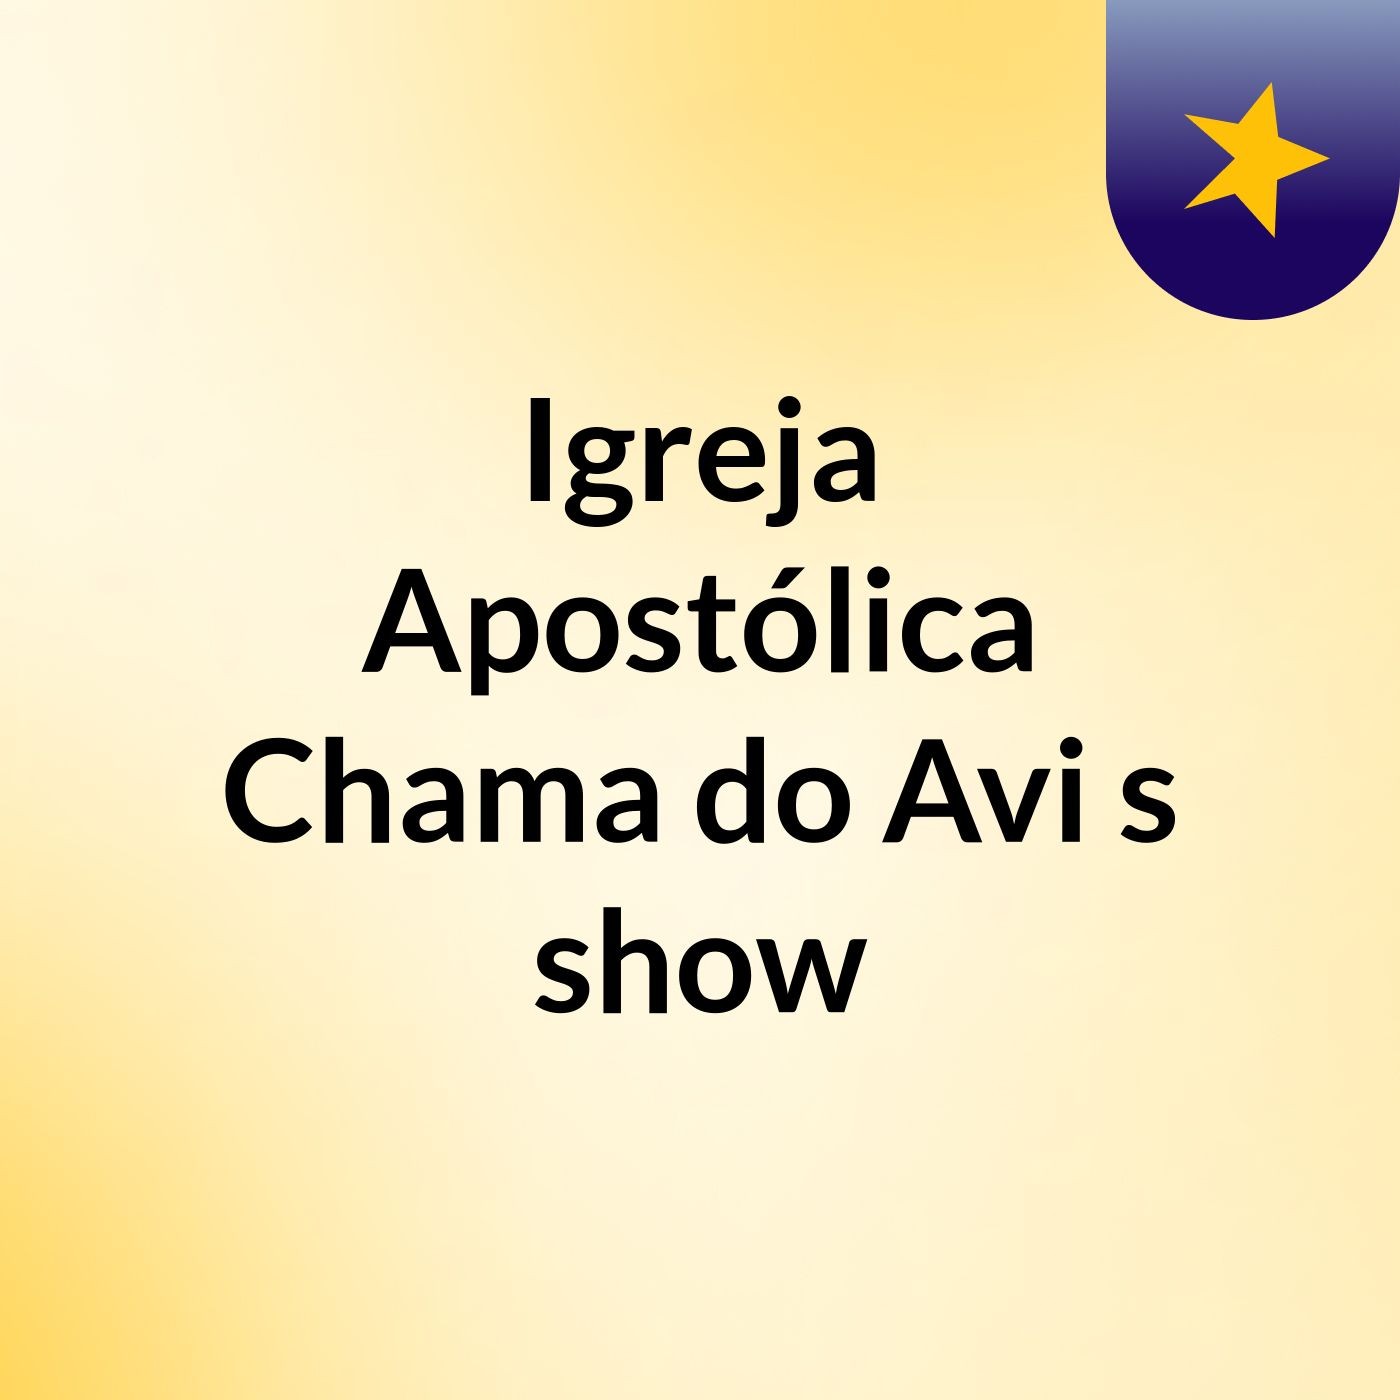 Episódio 2 - Igreja Apostólica Chama do Avi's show